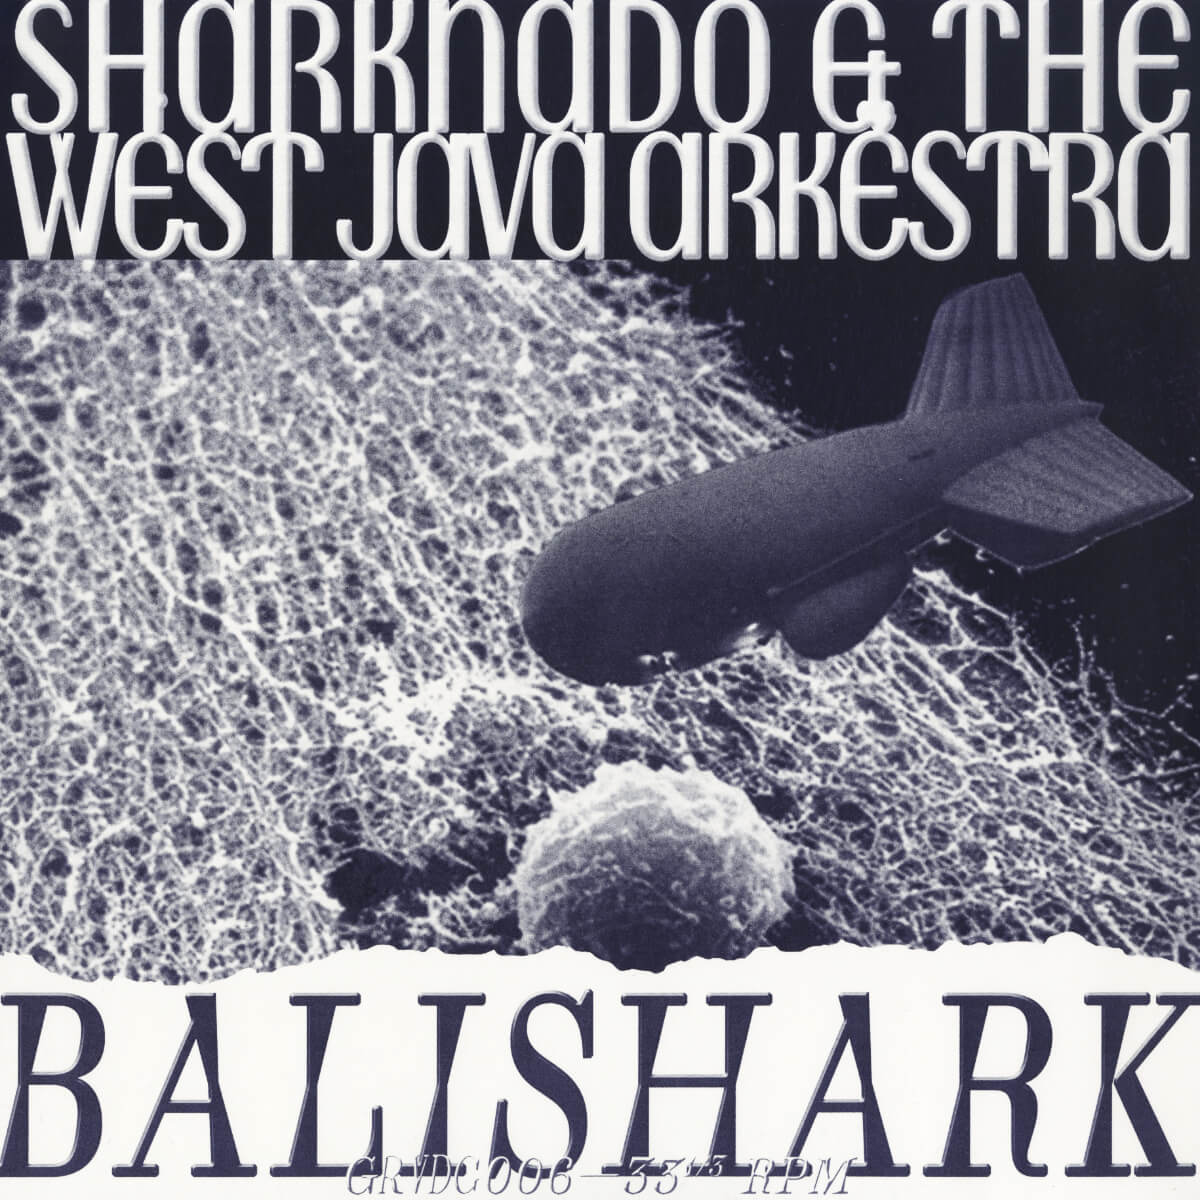 Sharknado and the West Java Arkëstra – Balishark